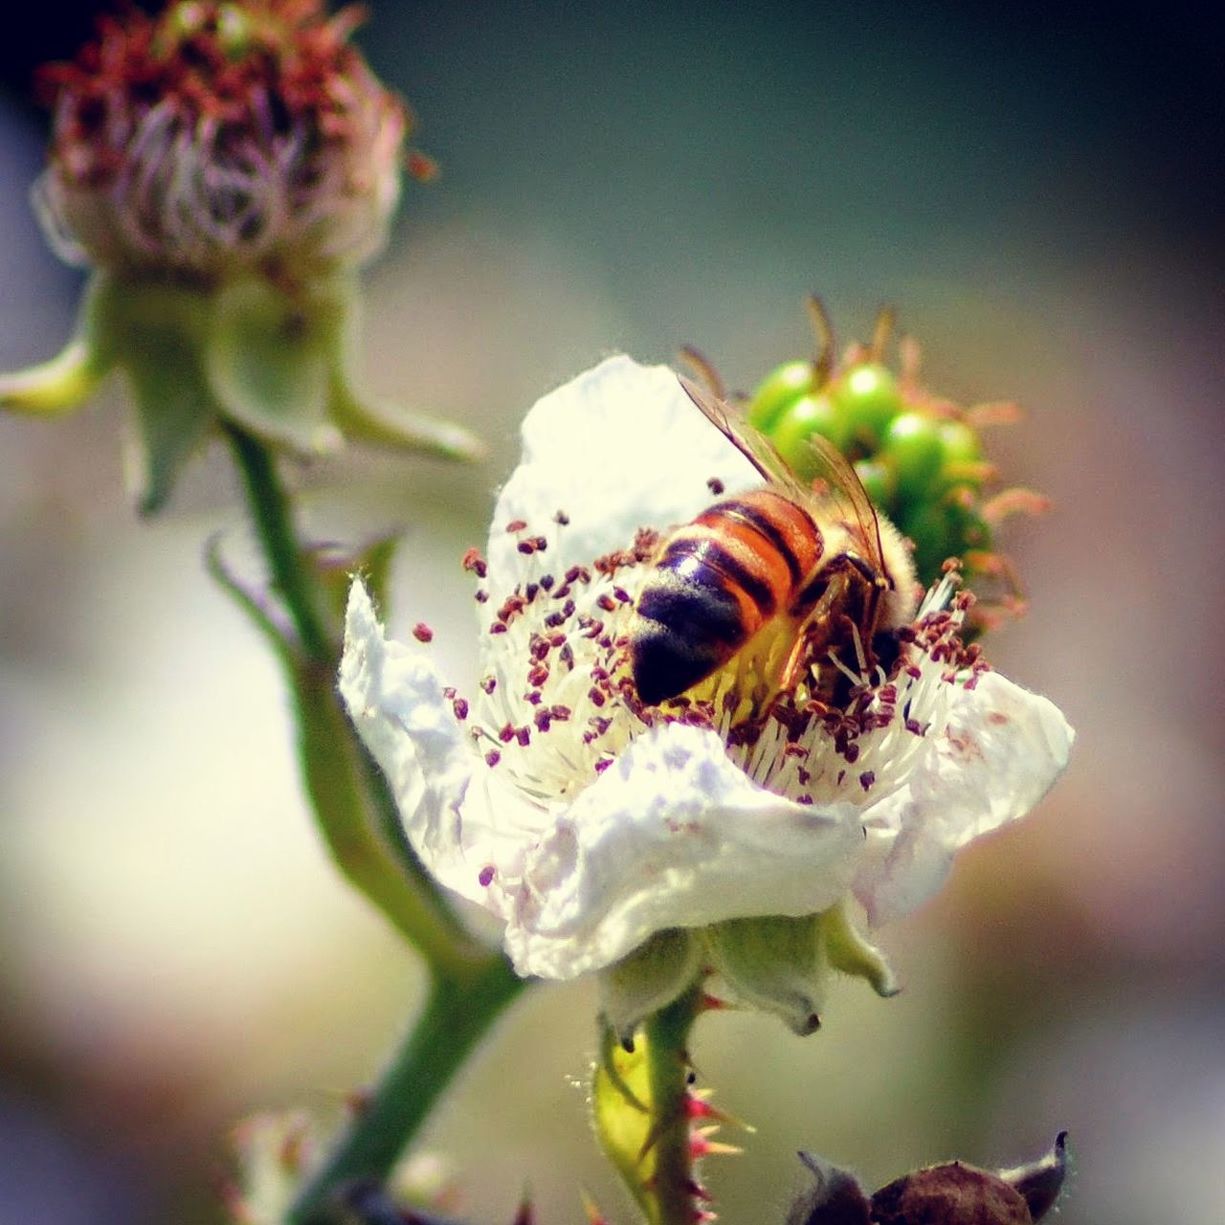 Honey bee pollinating flower